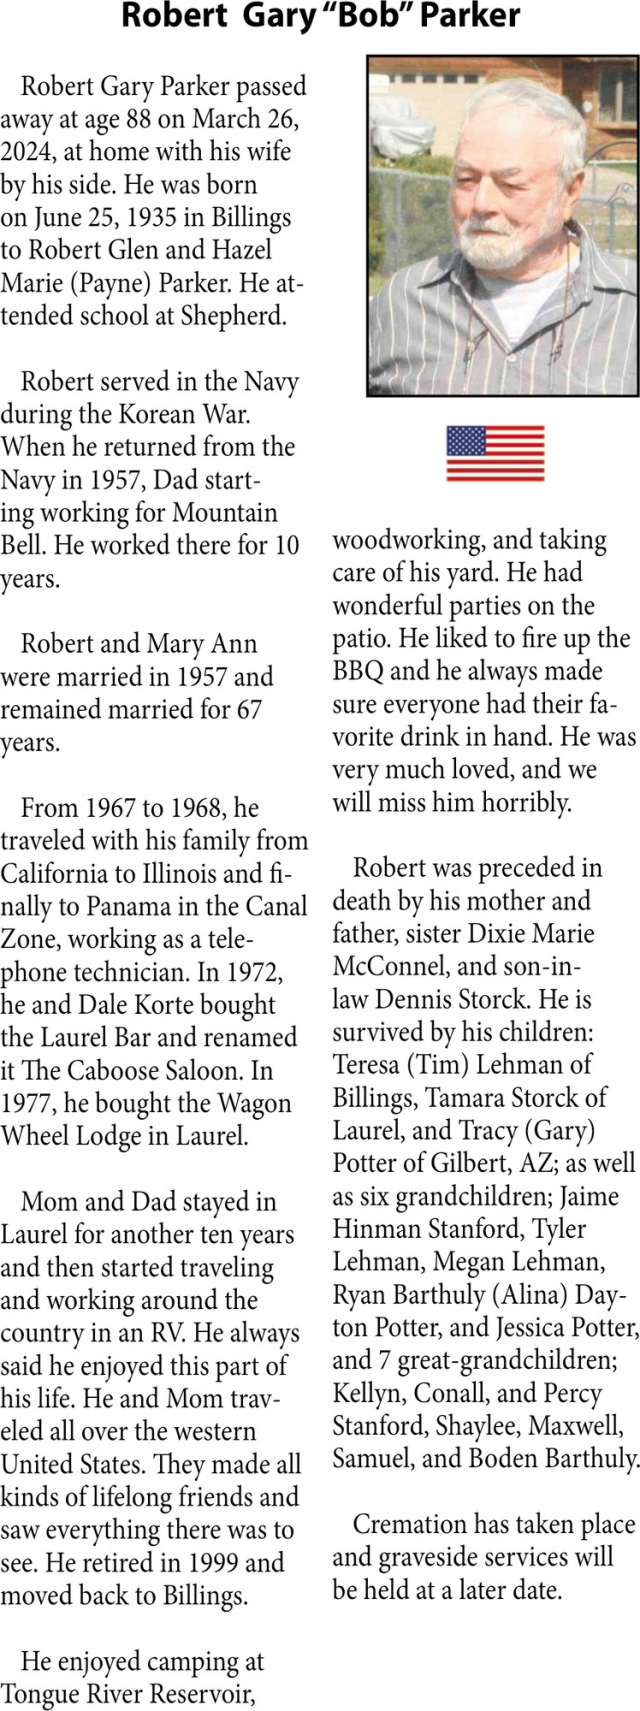 Robert Gary Parker, Obituaries, Glendive, MT